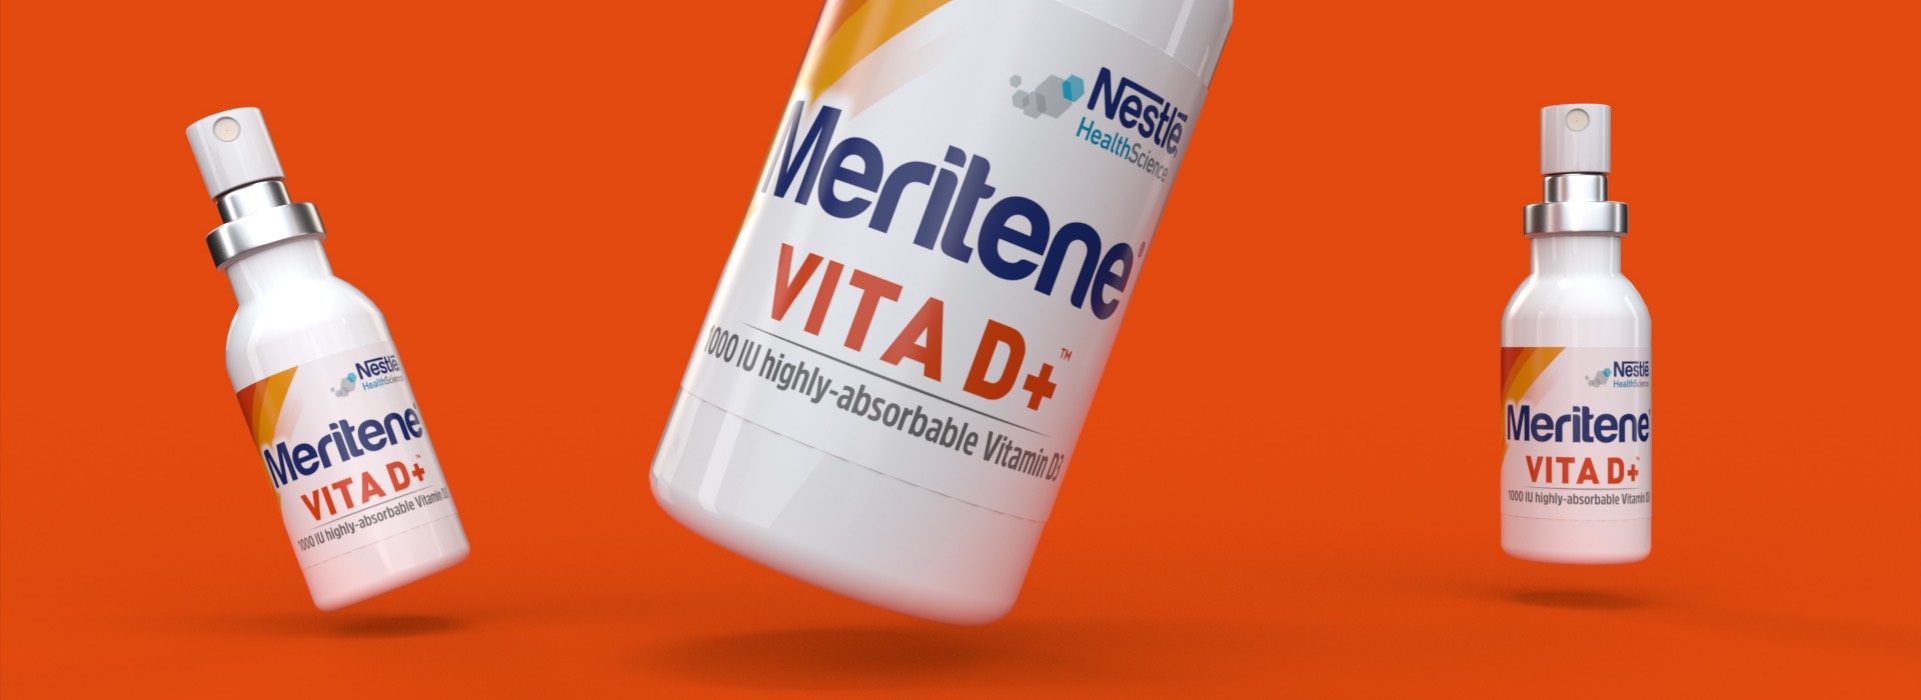 Nestlé Health Science Vita D+ innovativo integratore spray campagna comunicazione ATC